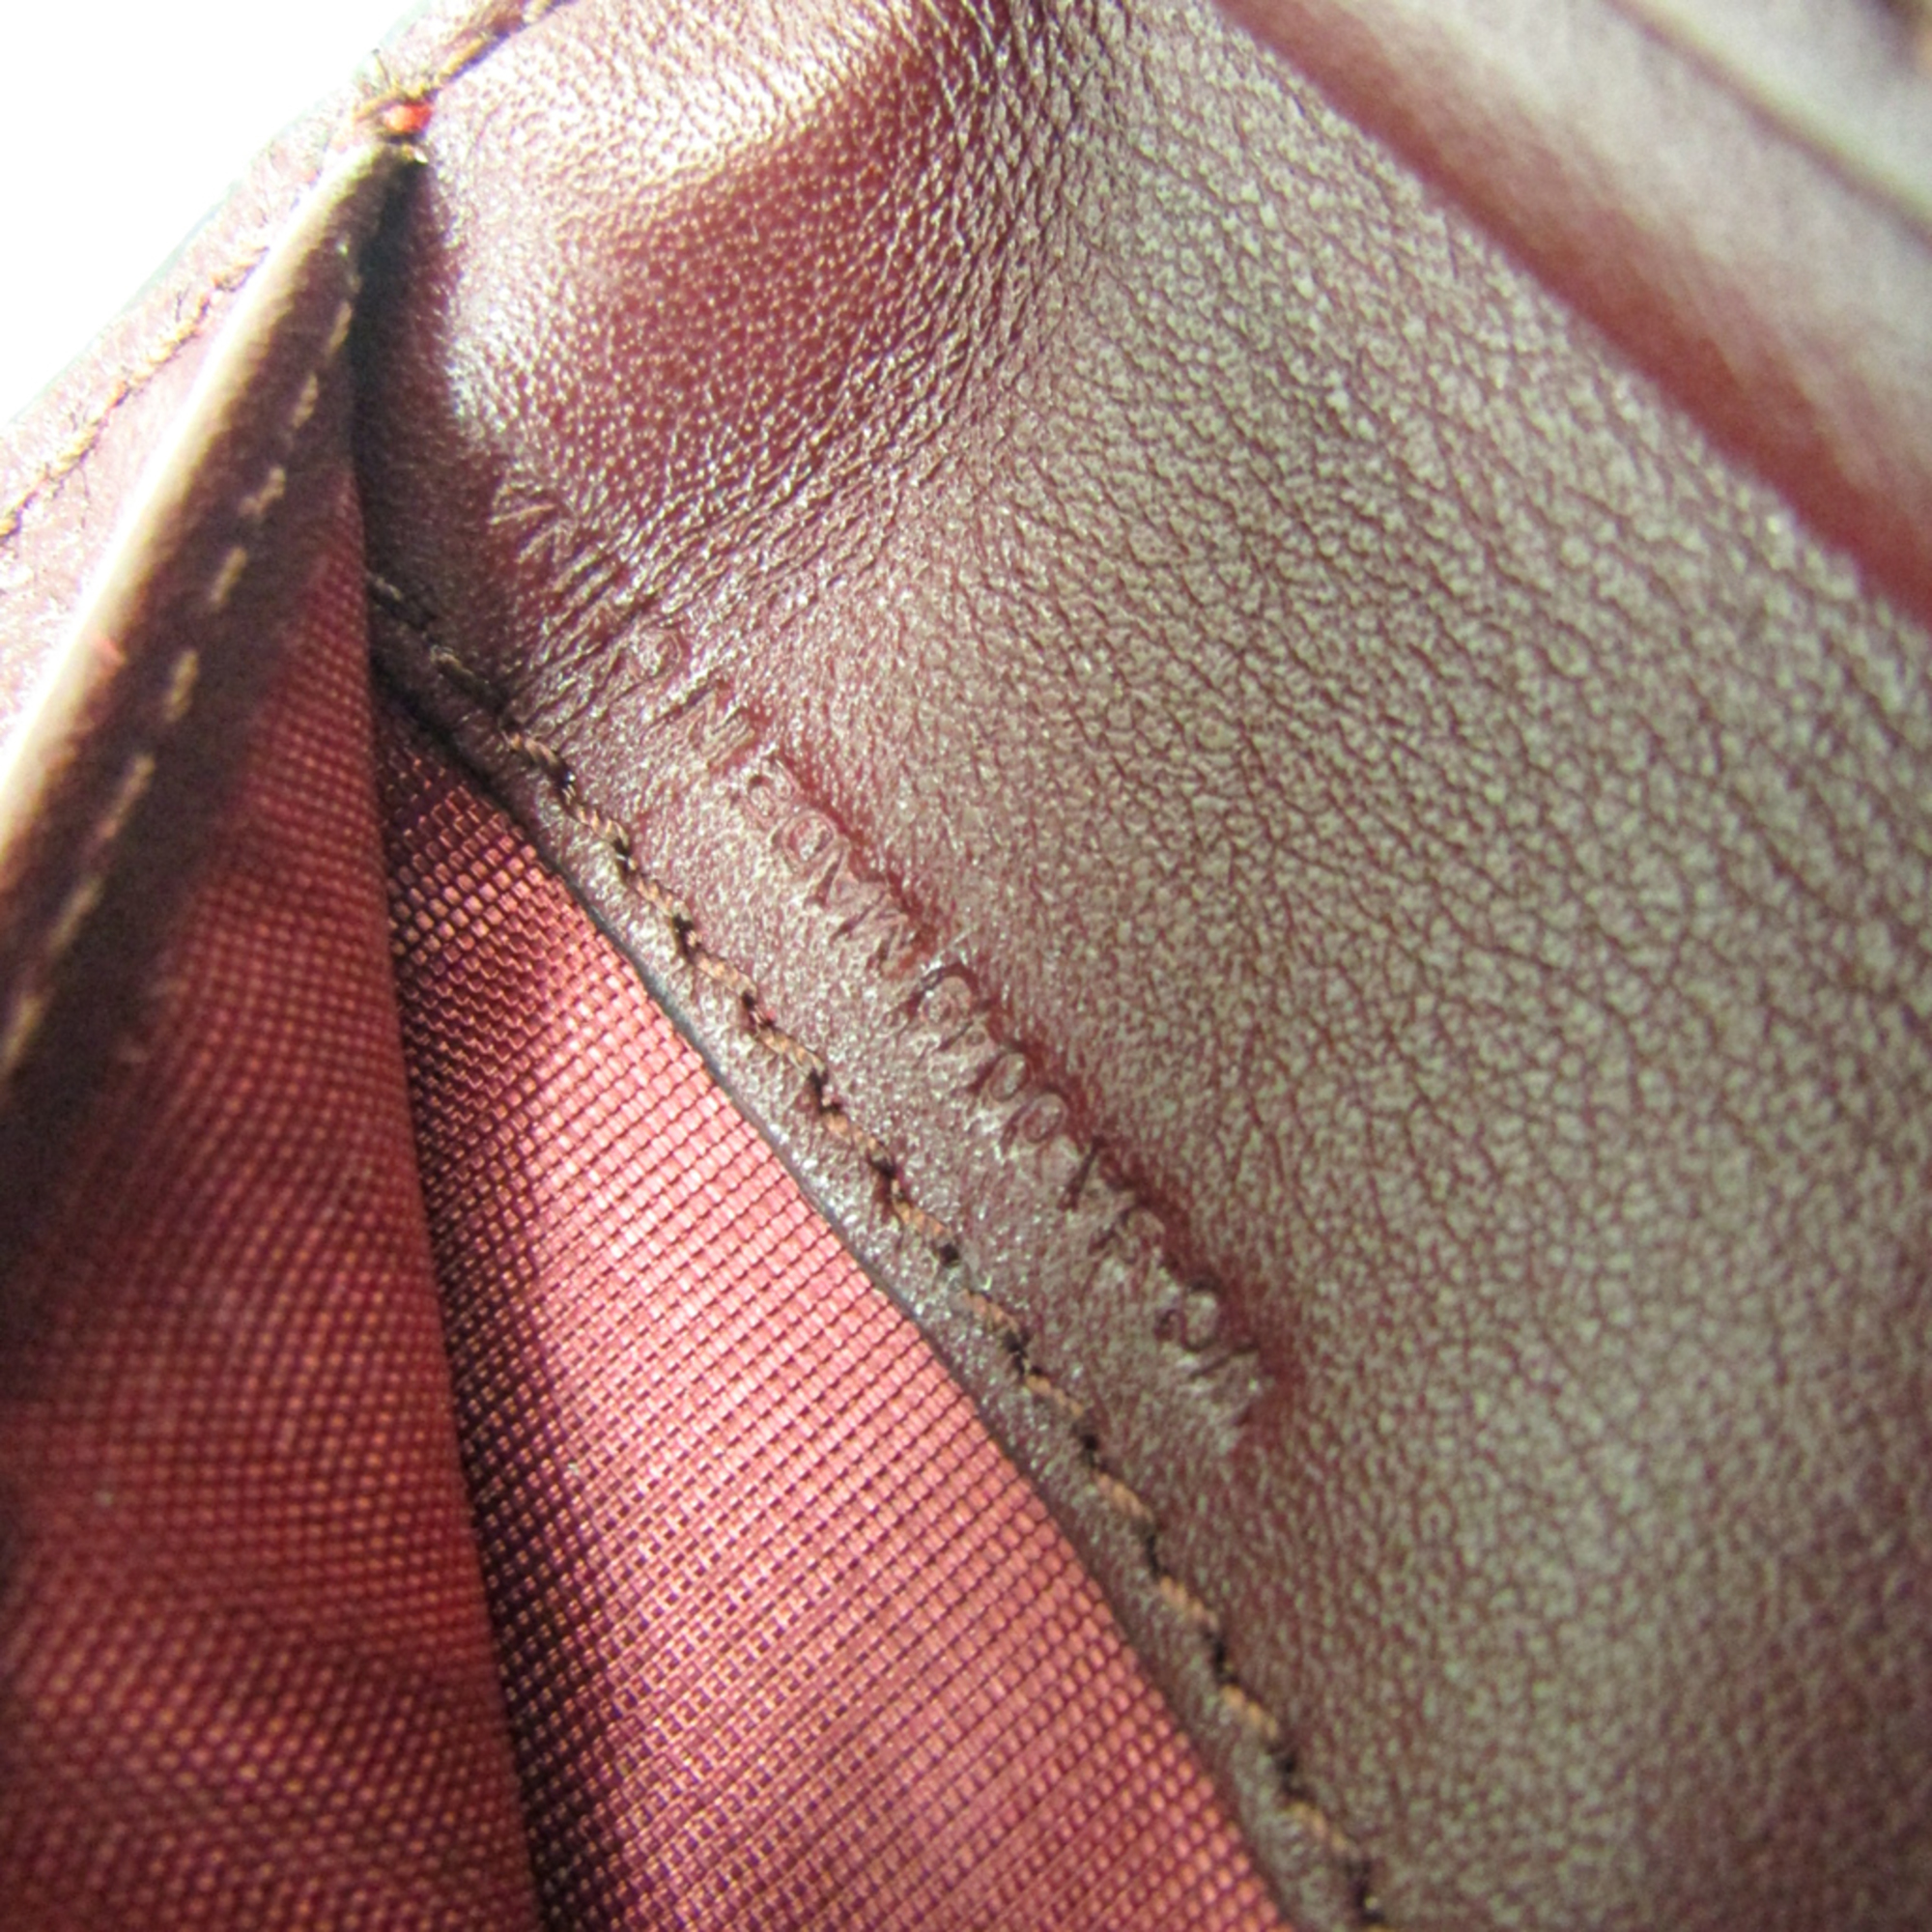 Celine  Coated Leather Long Wallet (tri-fold) Bordeaux,Red